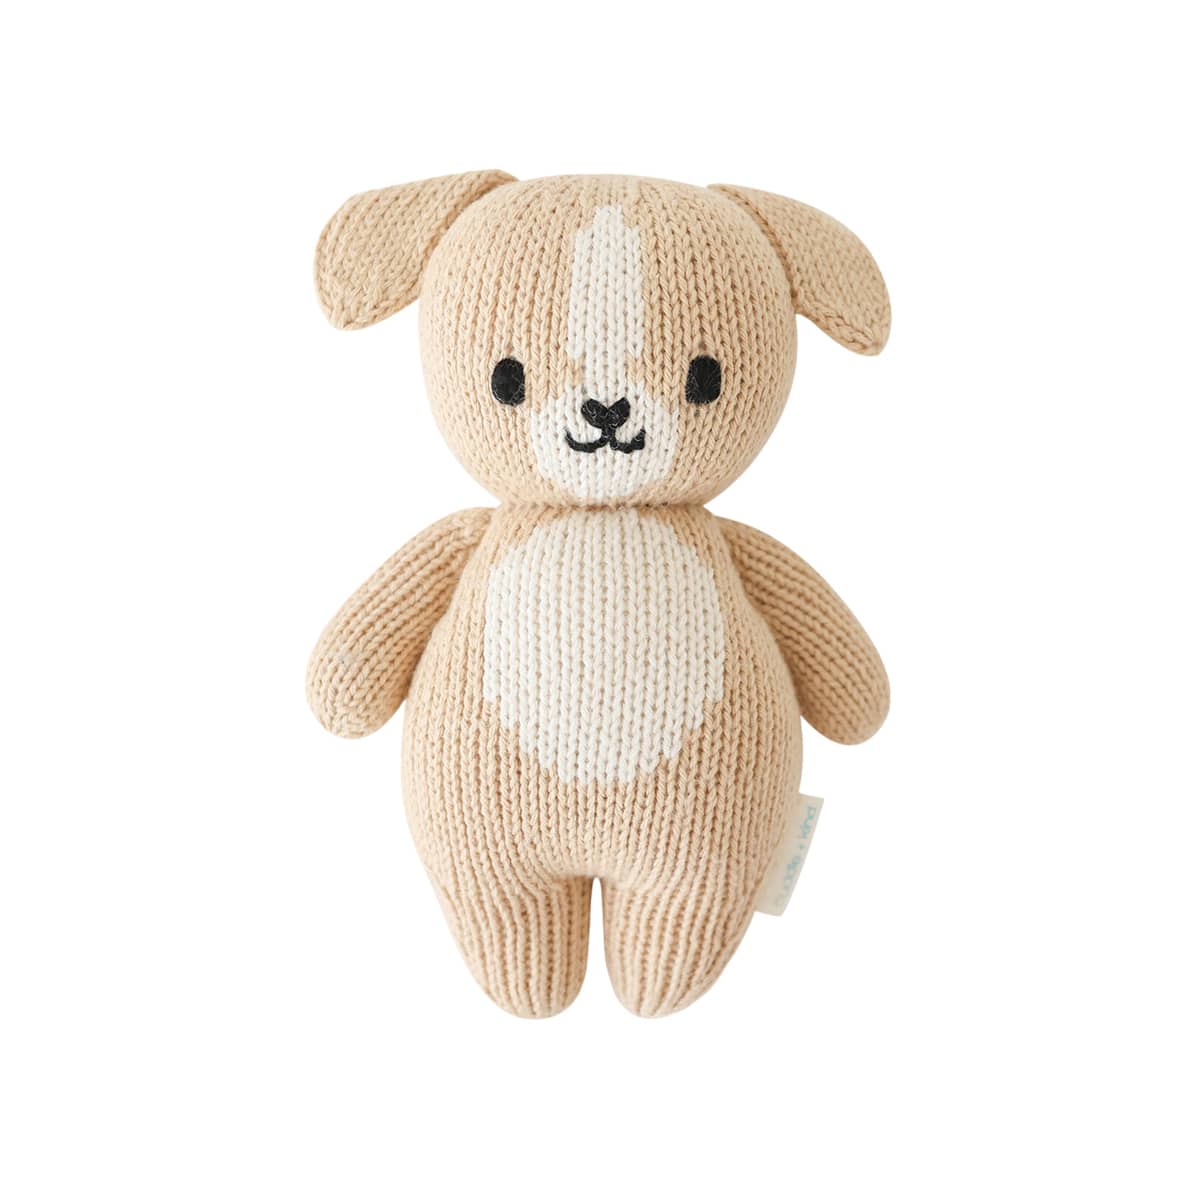 Cuddle + Kind Hand-Knit Doll - Baby Puppy